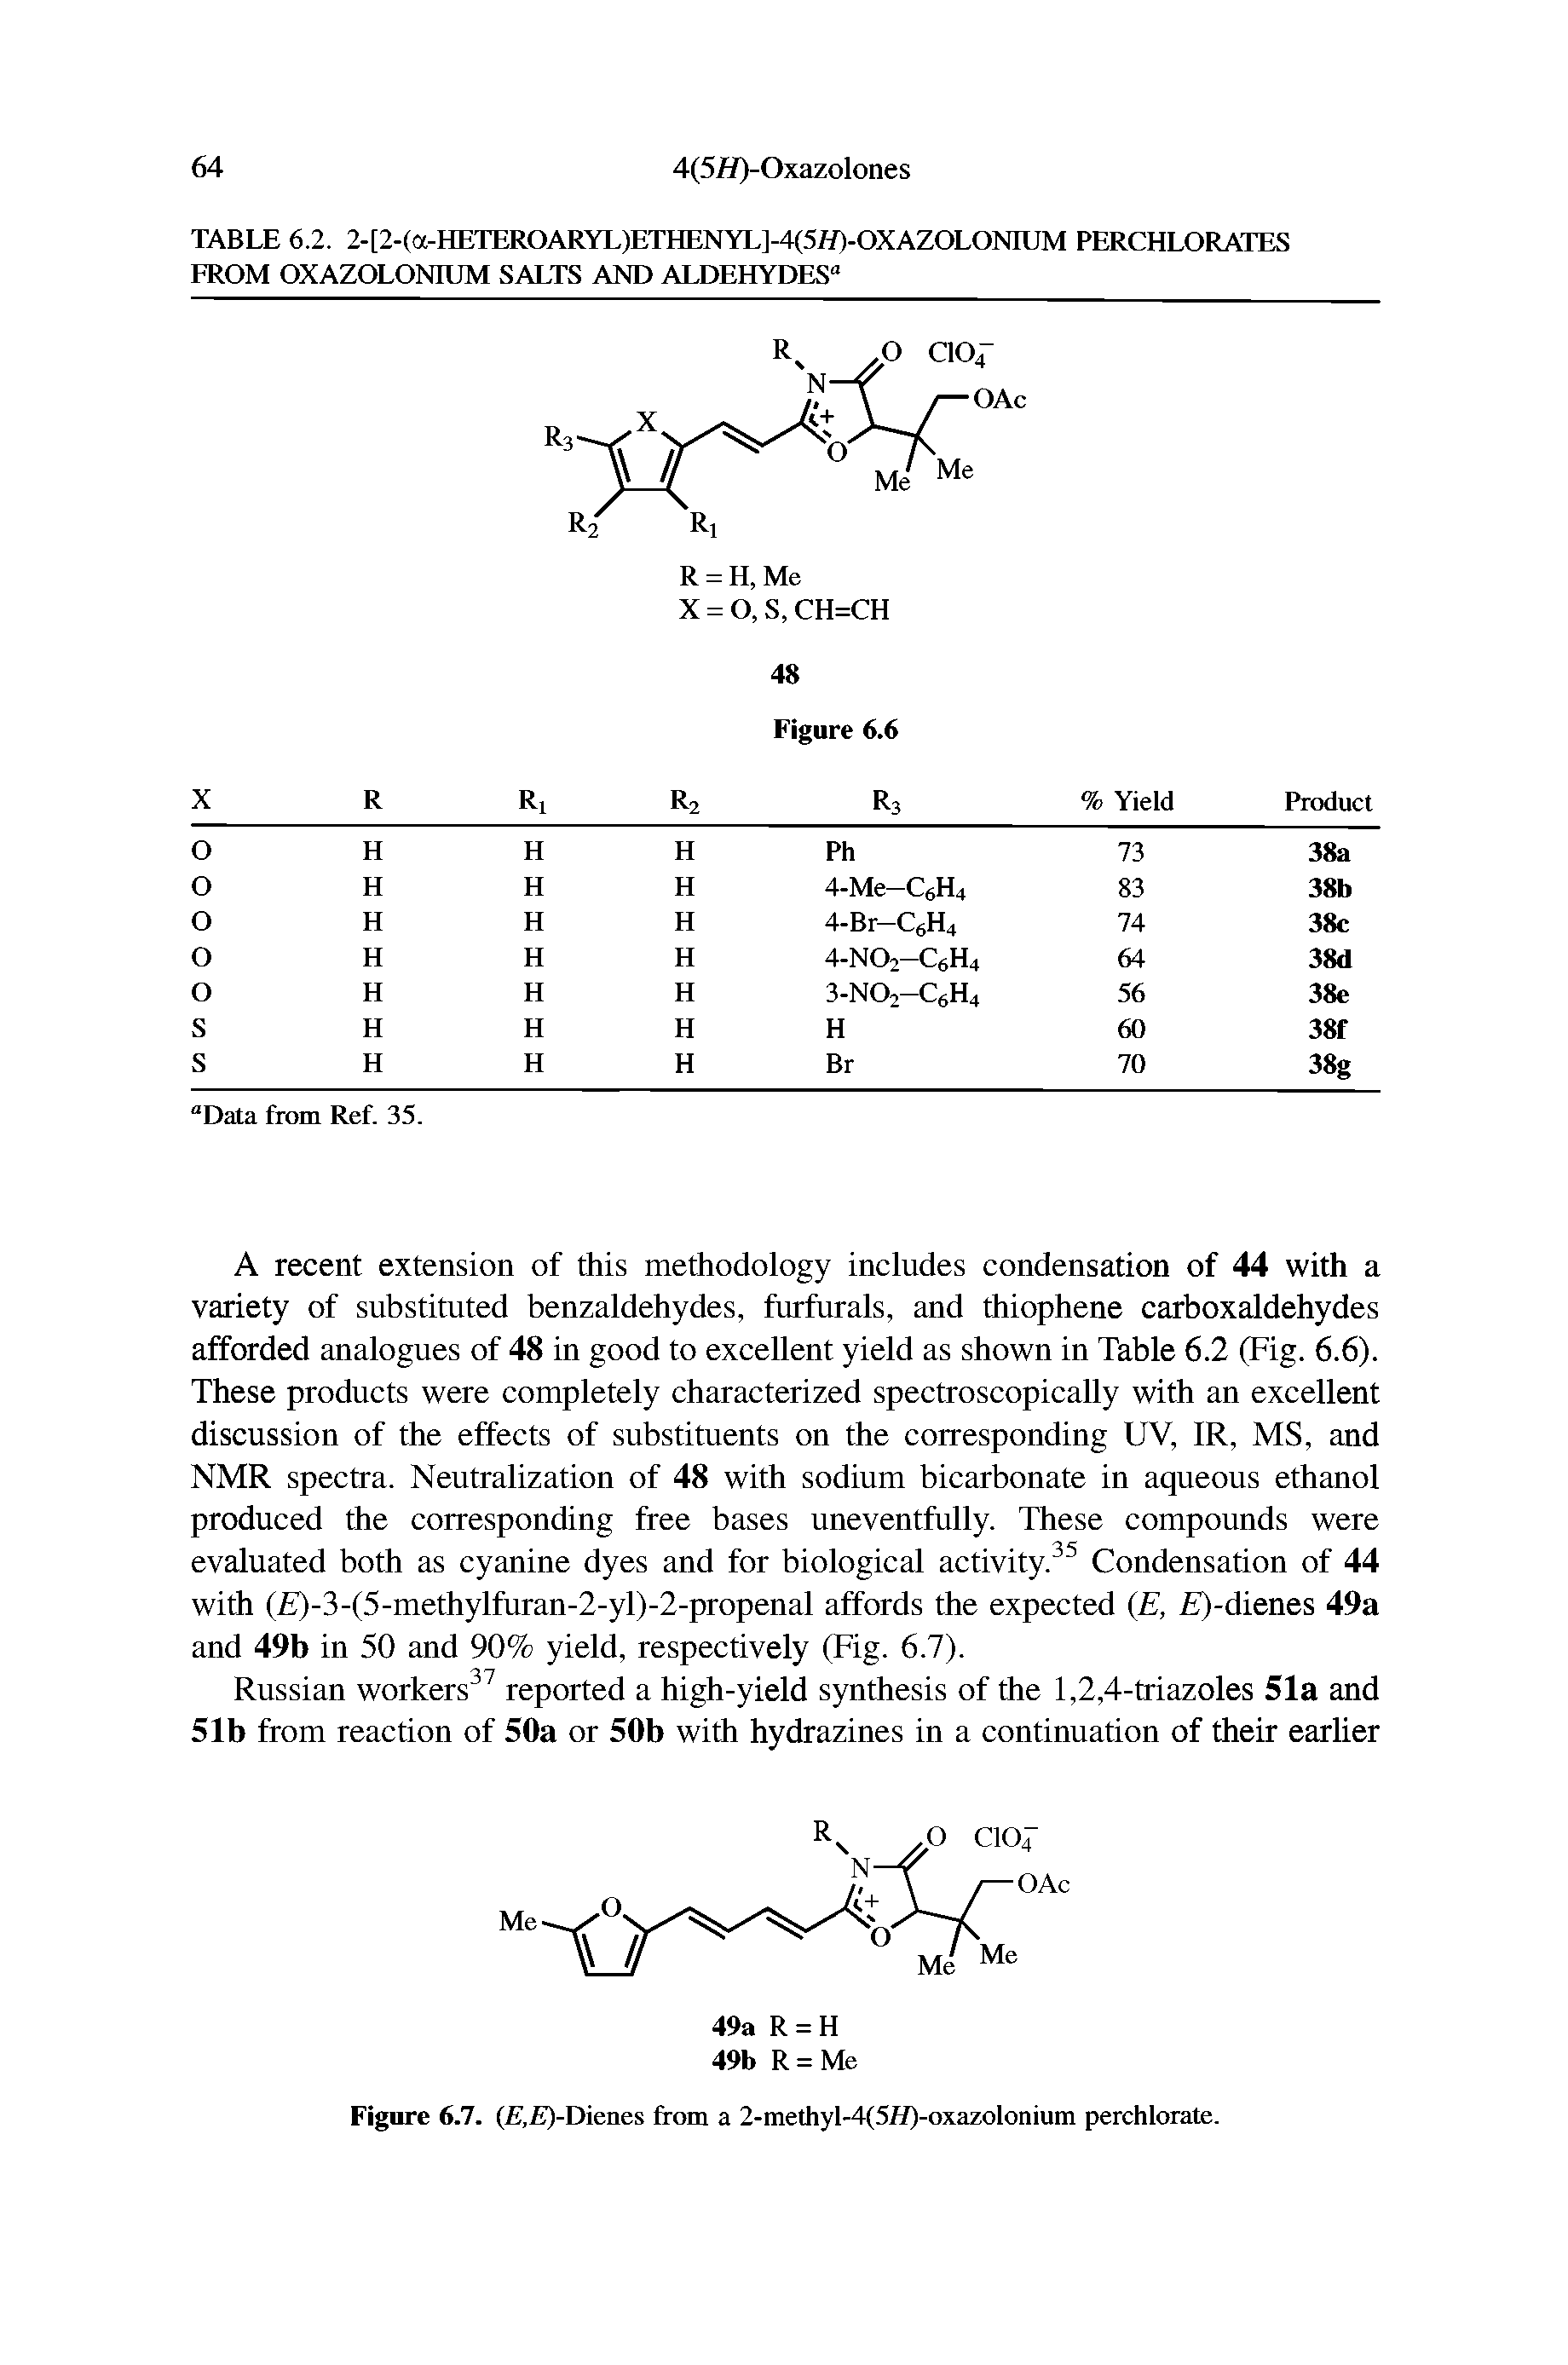 Figure 6.7. (E.Et-Dienes from a 2-methyl-4(5f/)-oxazolonium perchlorate.